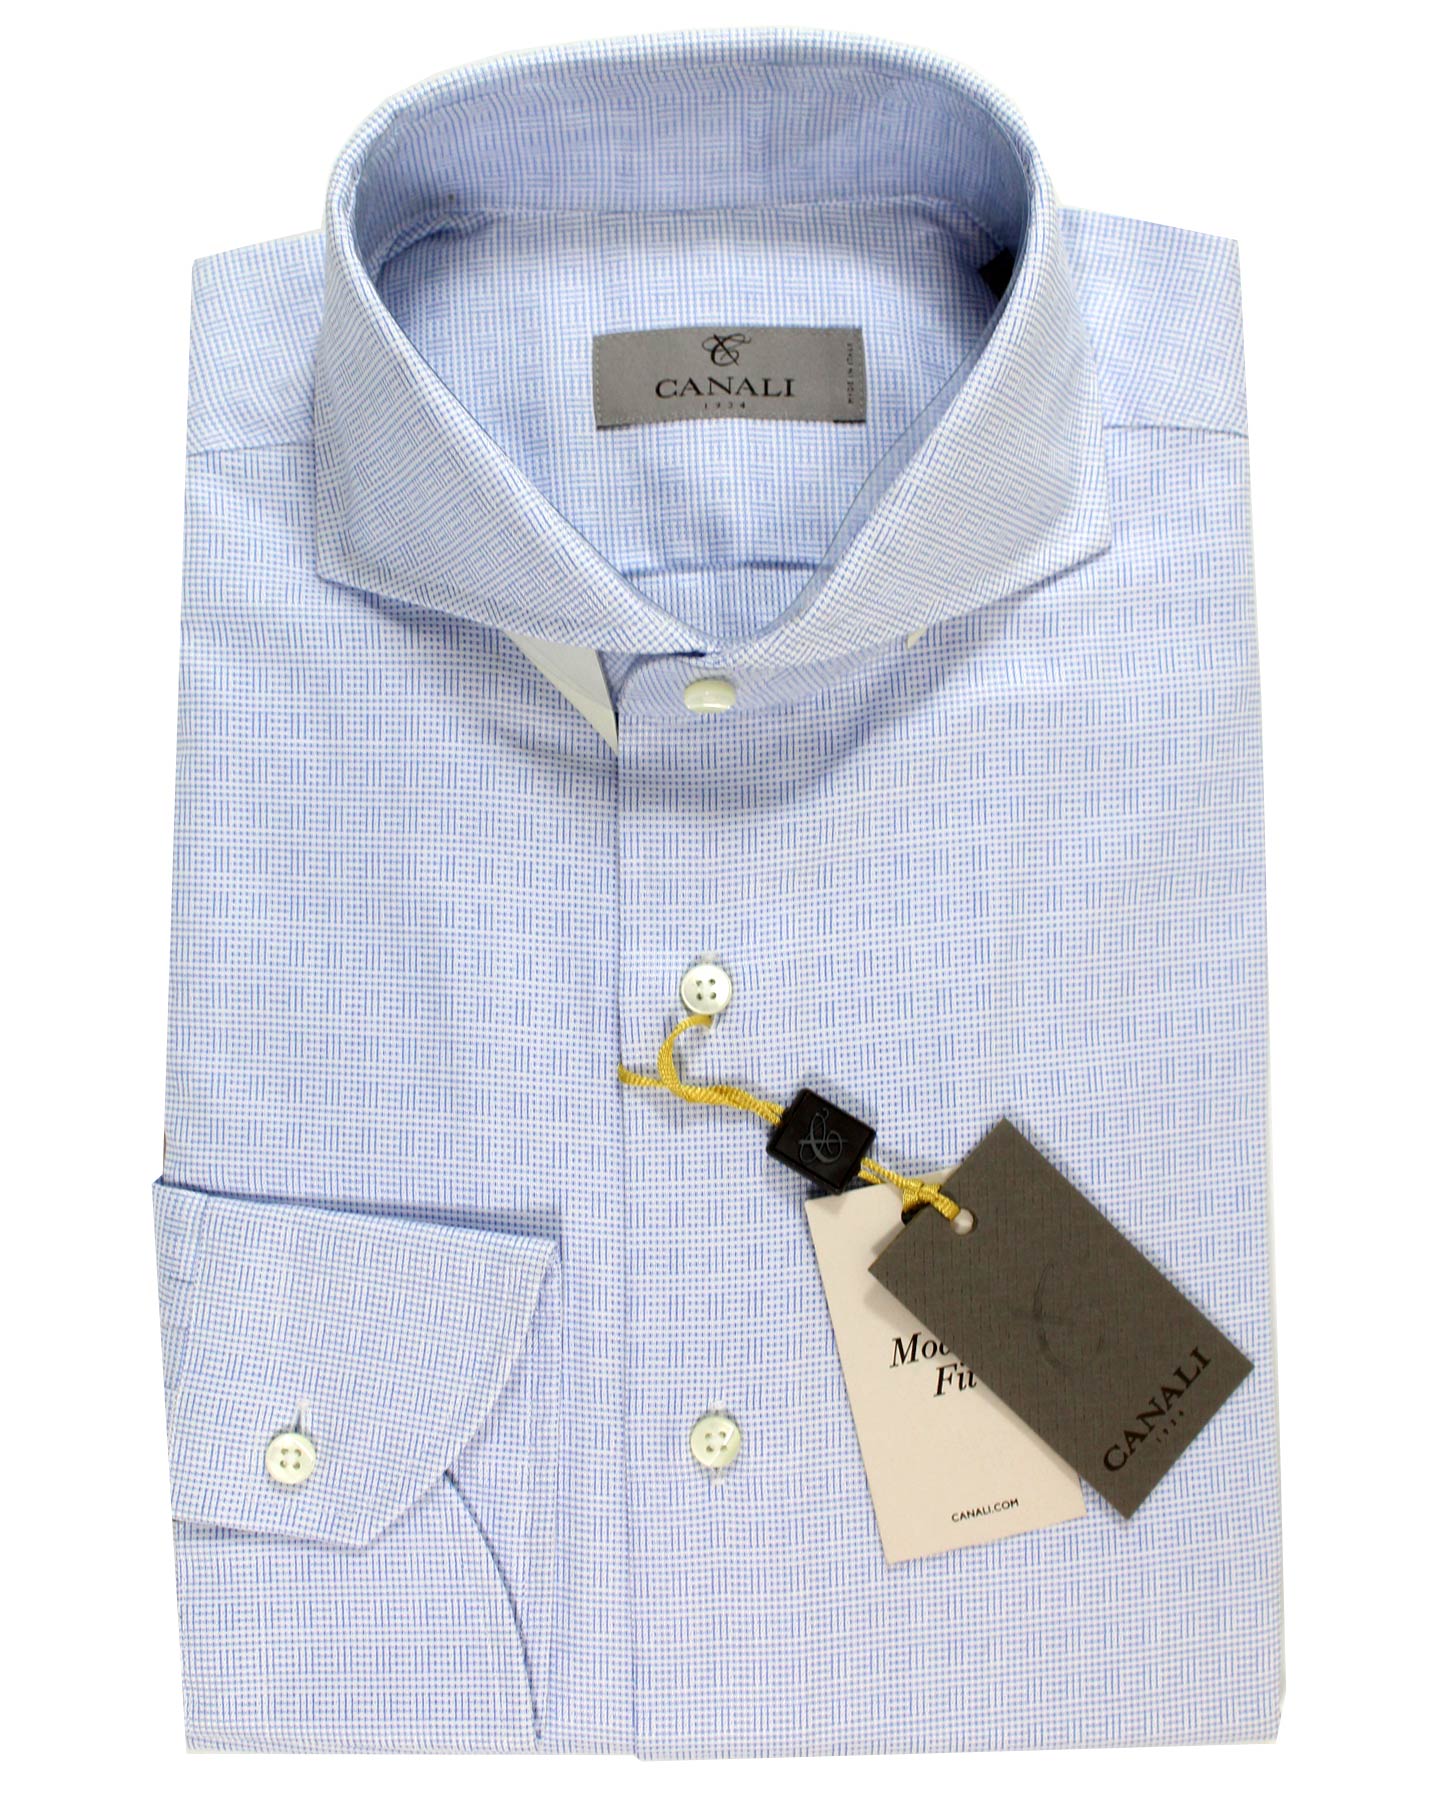 Canali Shirt Exclusive White Royal Blue Pattern